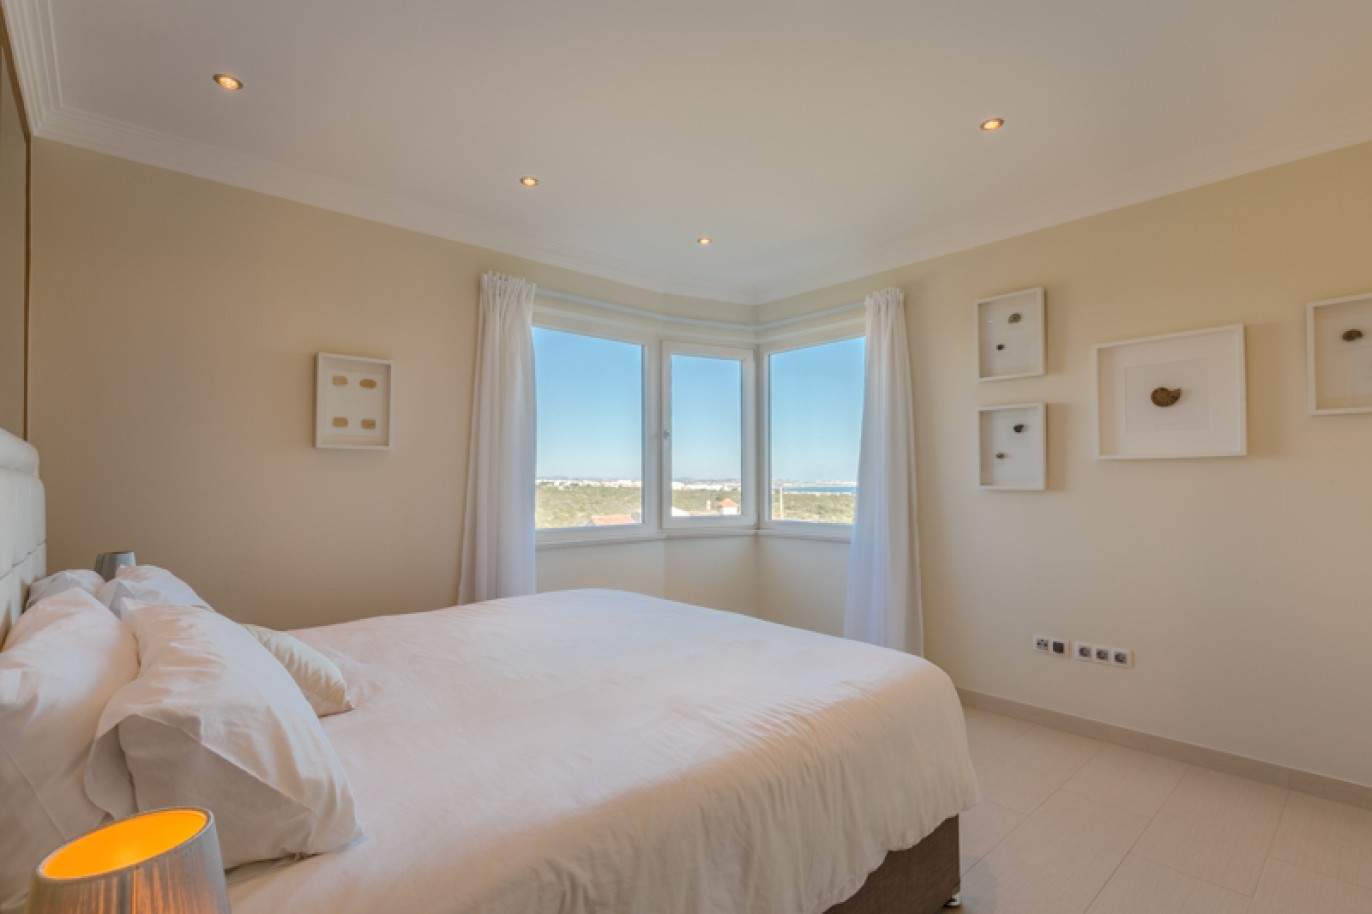 Villa for sale, with sea view, near beach and golf, Algarve, Portugal_76418